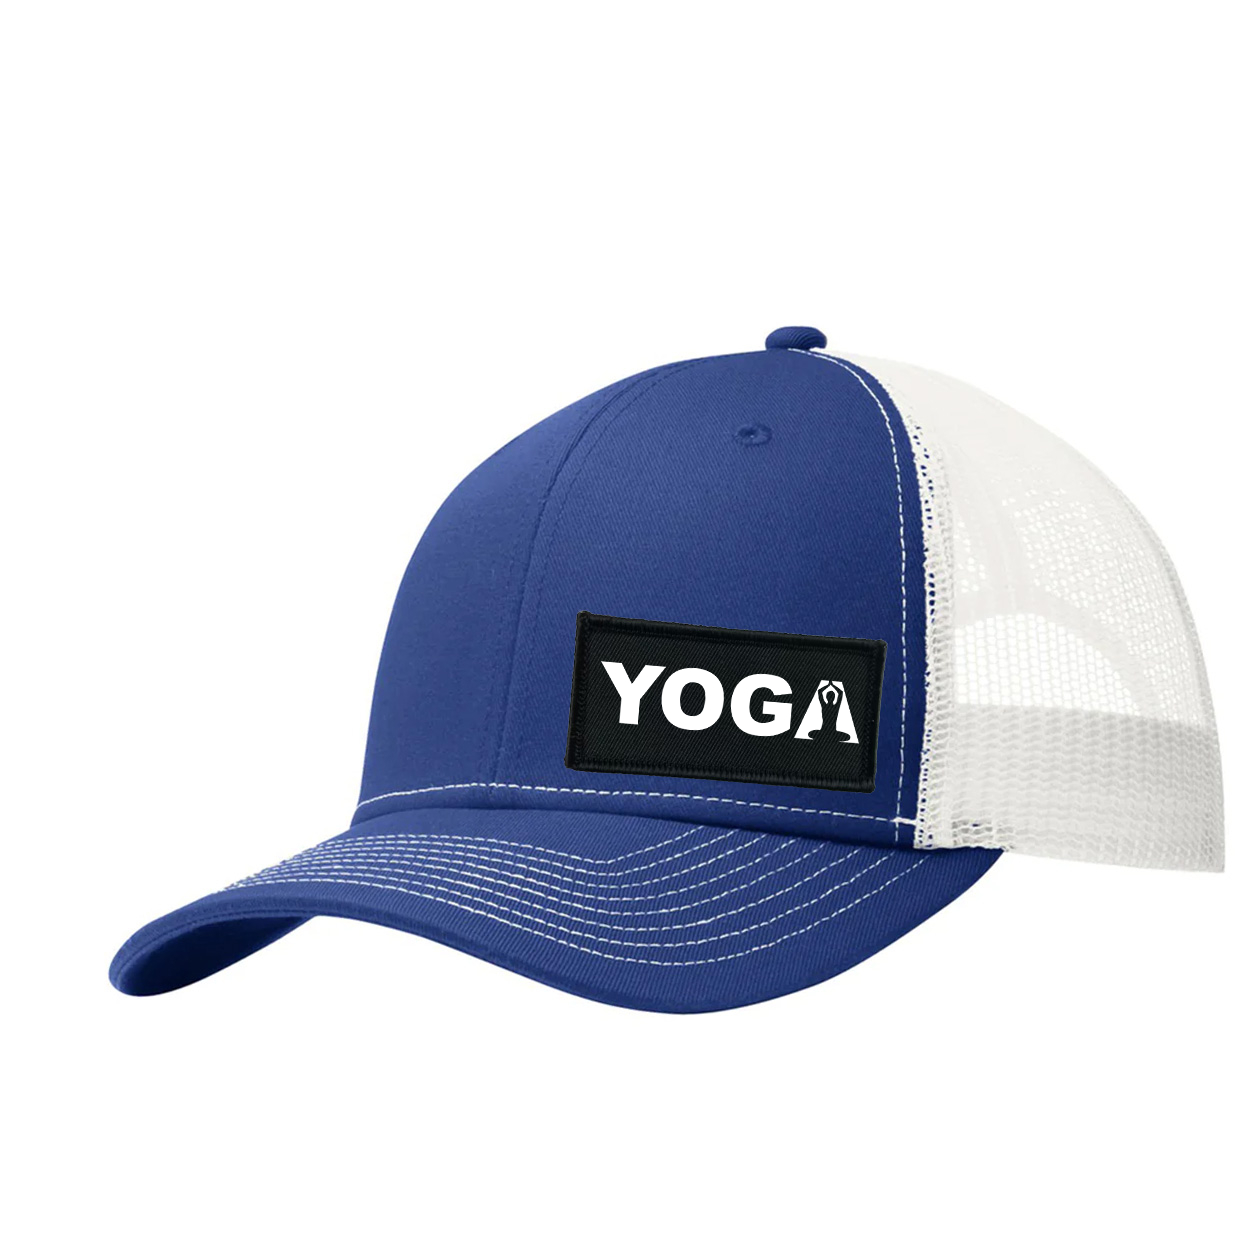 Yoga Meditation Logo Night Out Woven Patch Snapback Trucker Hat Dark Royal/White (White Logo)